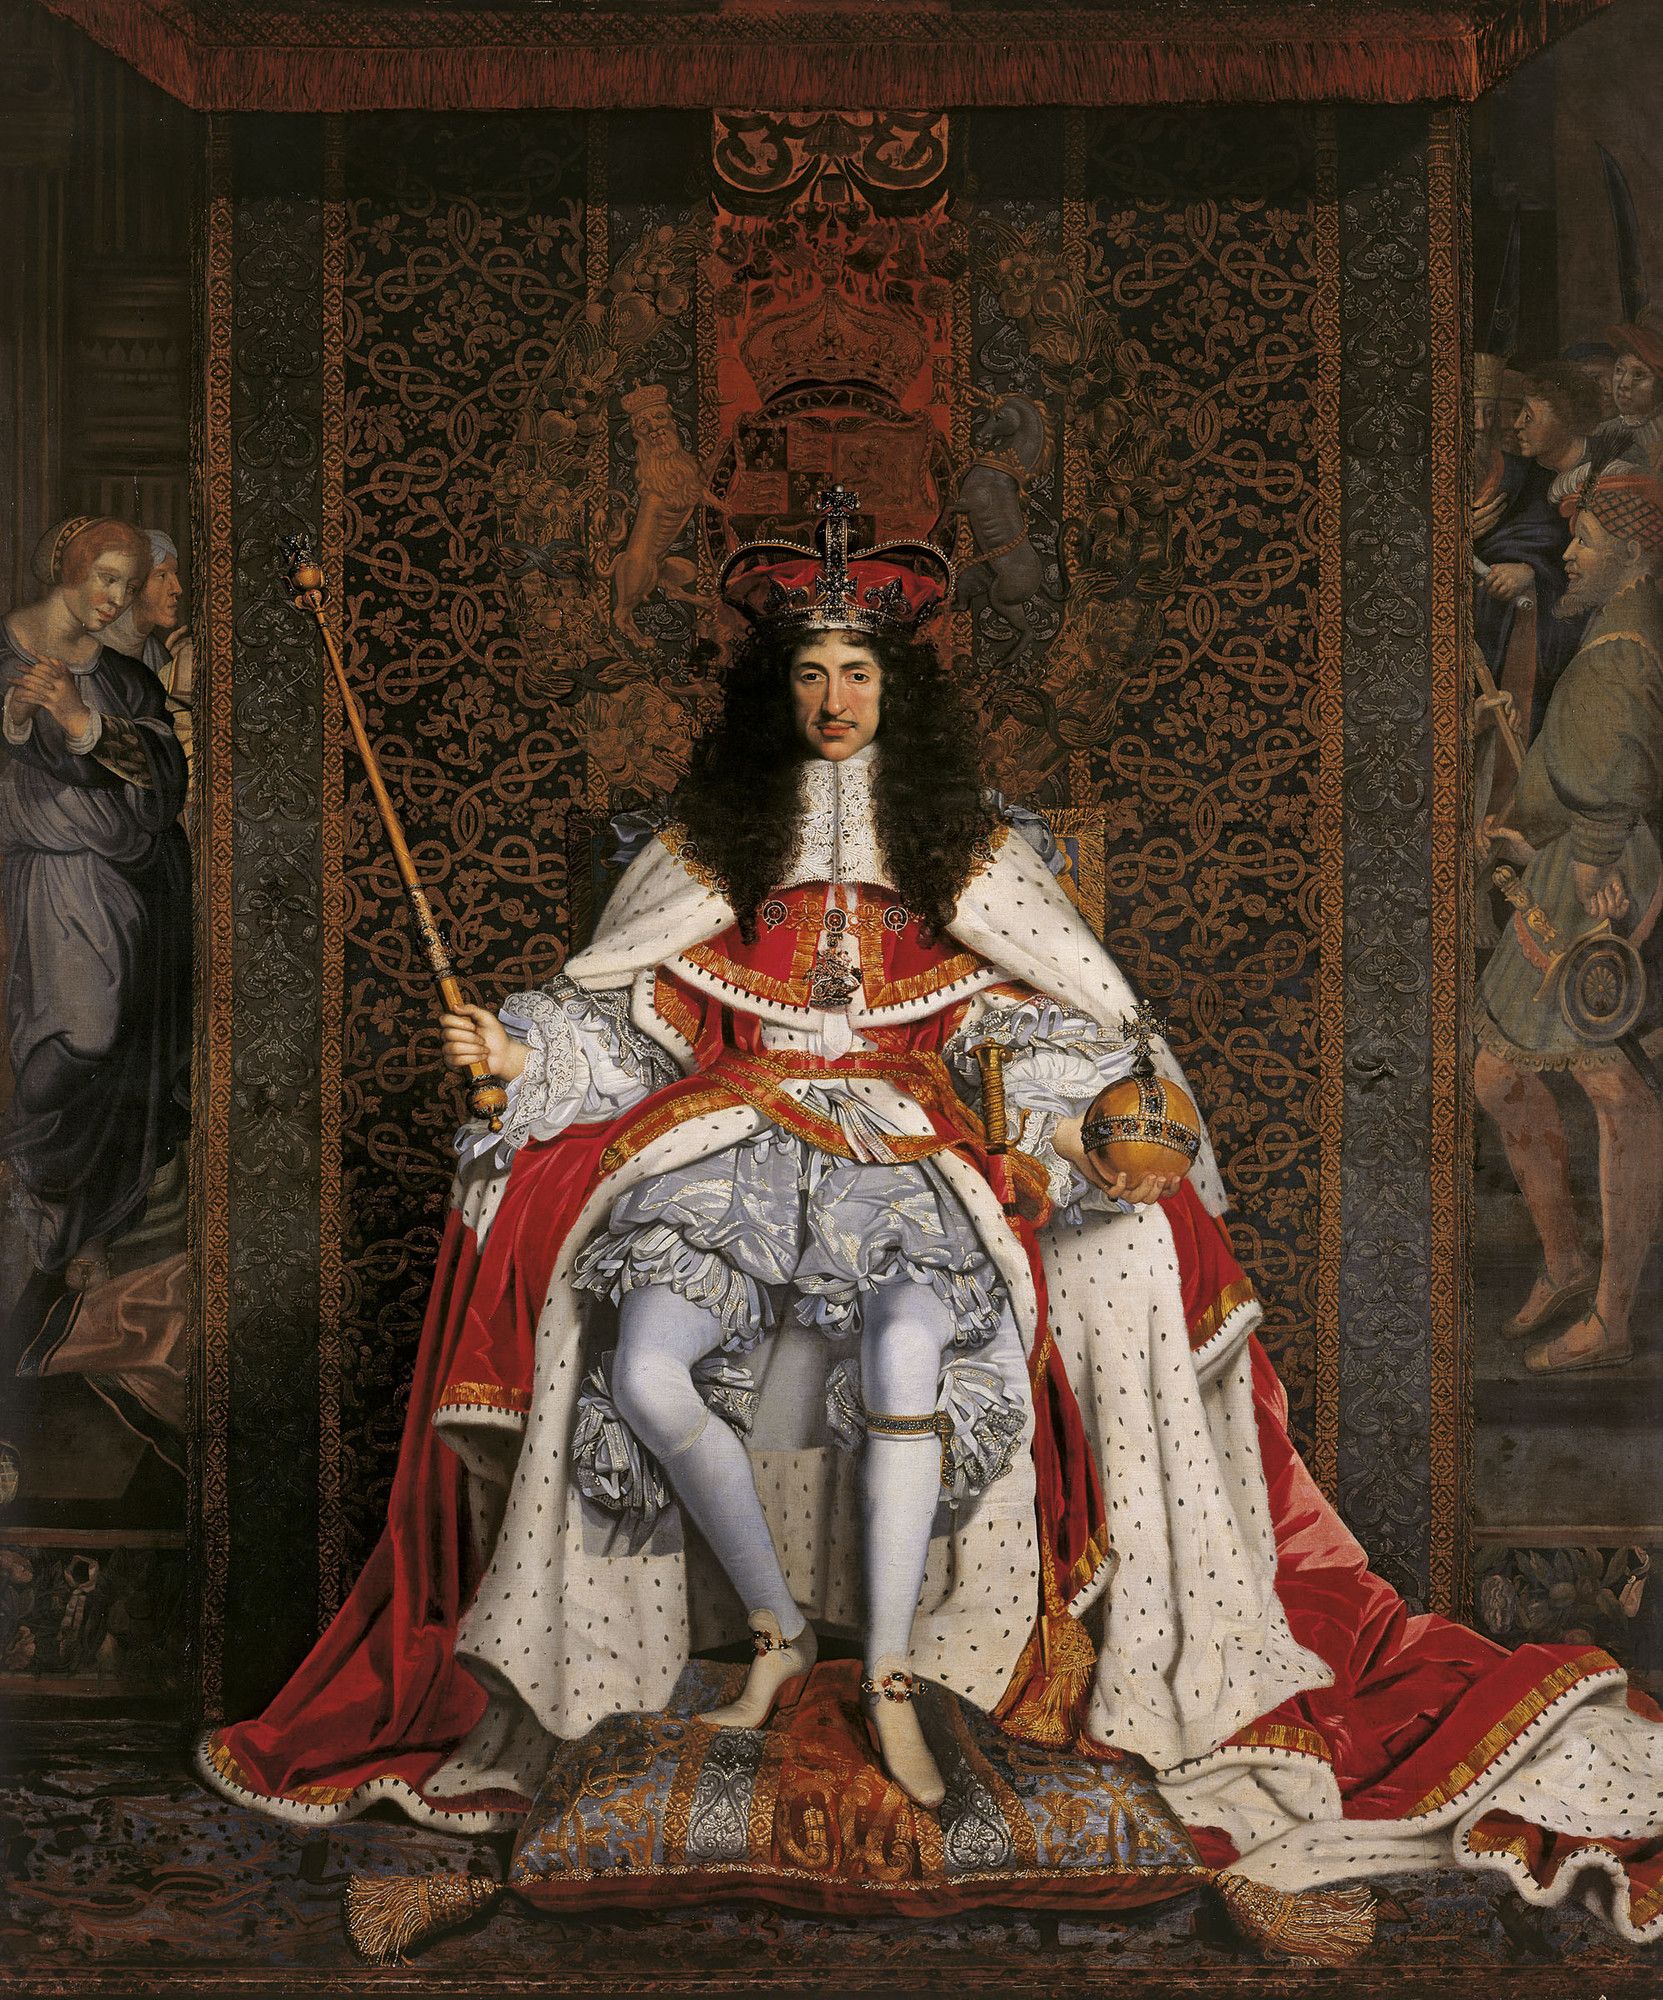 Portrait of Charles II (1630-1685) by John Michael Wright. 